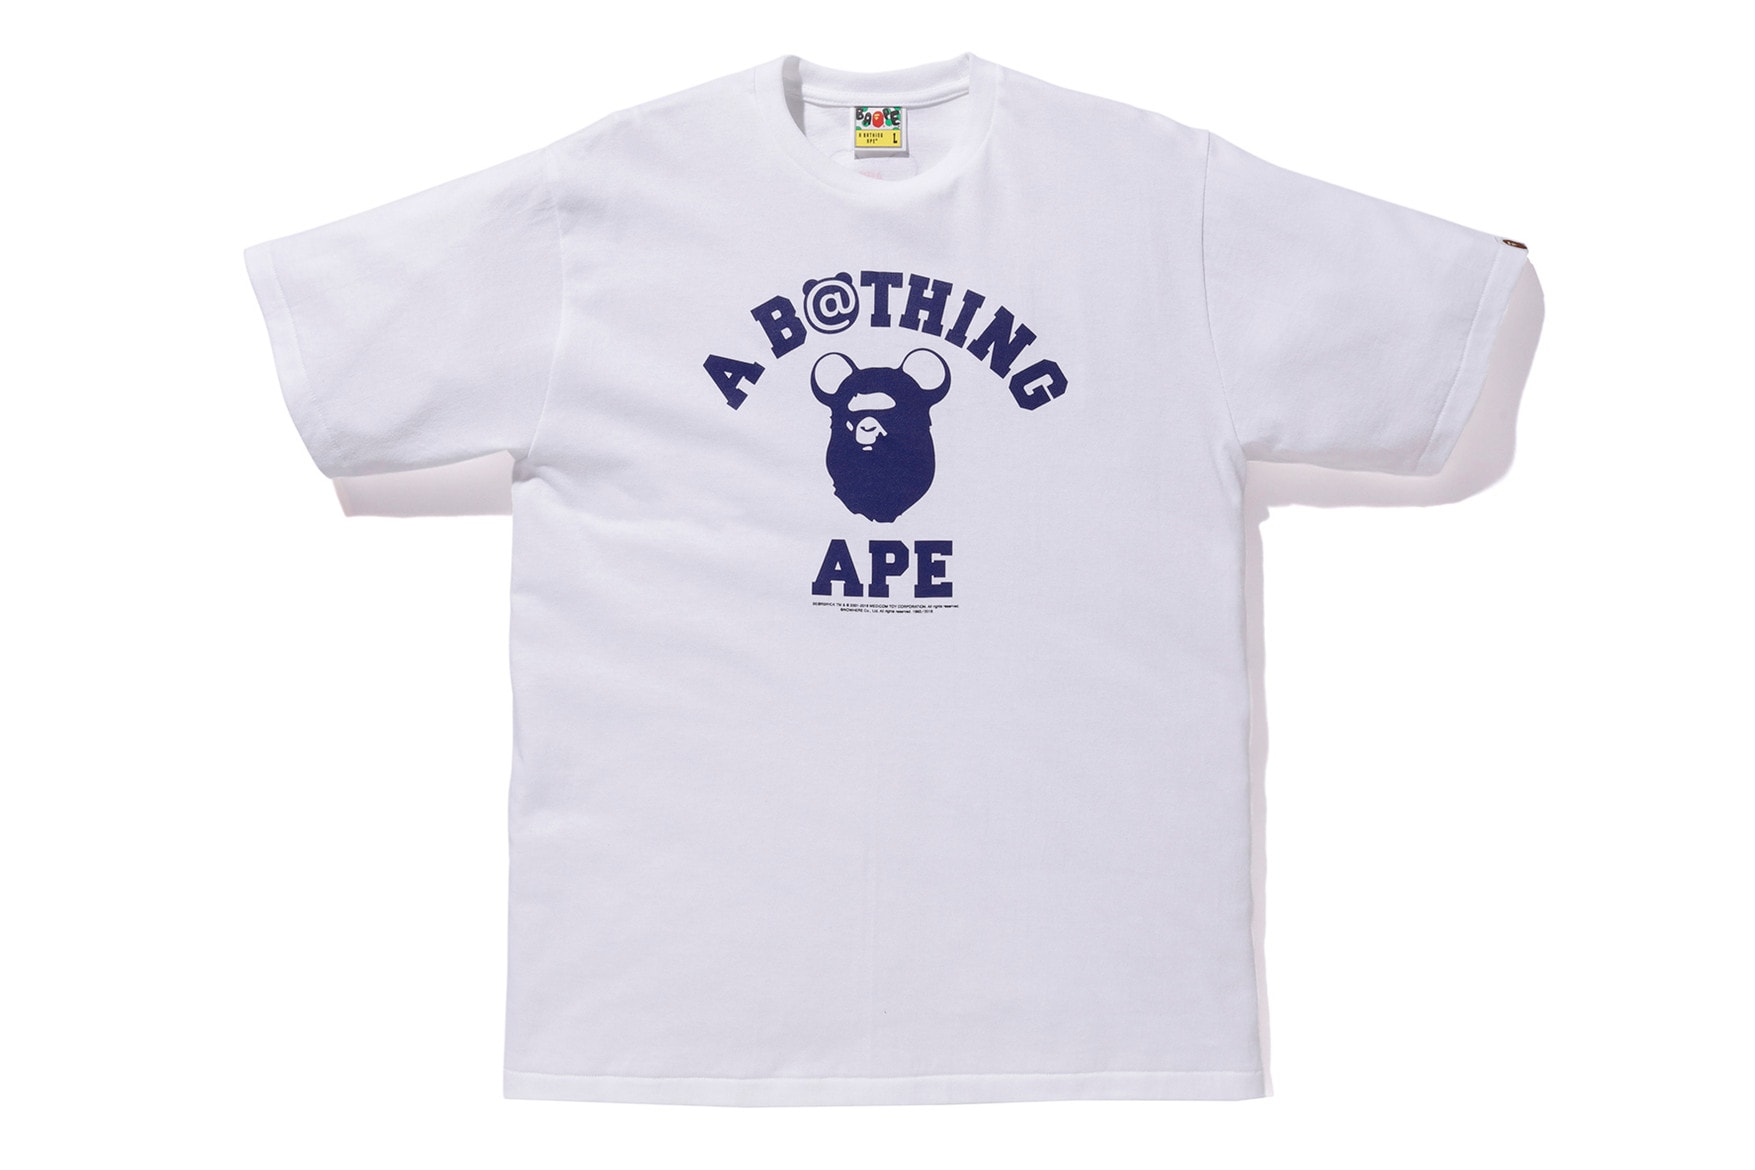 A BATHING APE® x Medicom Toy 推出全新 BE@RBRICK 聯乘 T-Shirt 系列